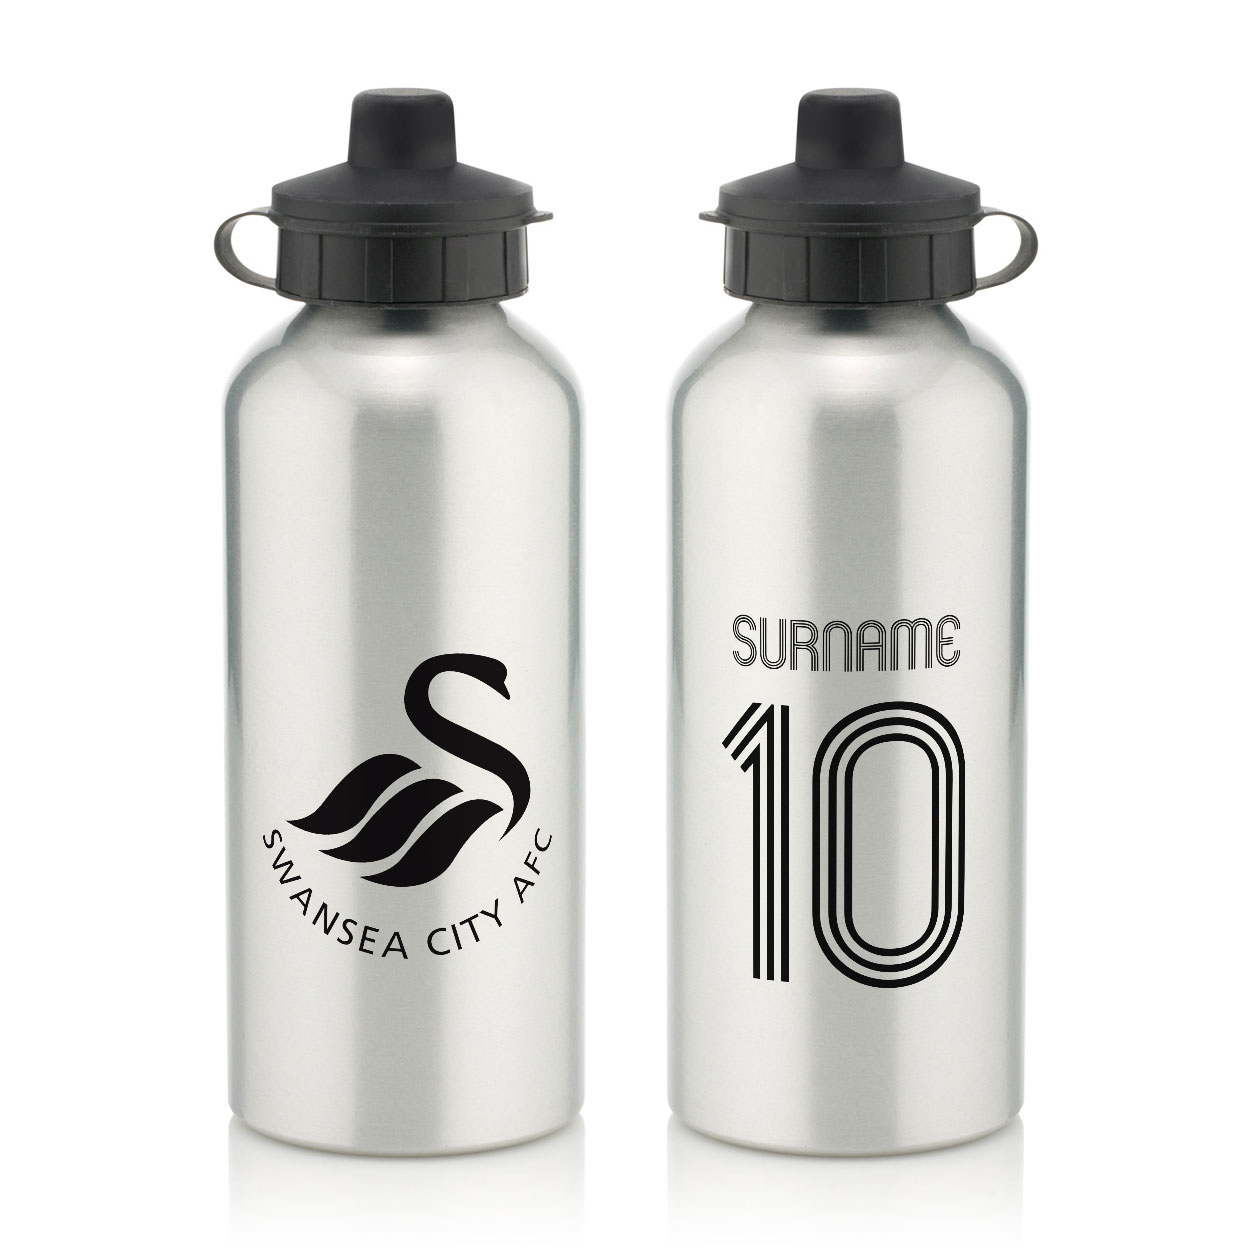 Personalised Swansea City FC Retro Shirt Water Bottle